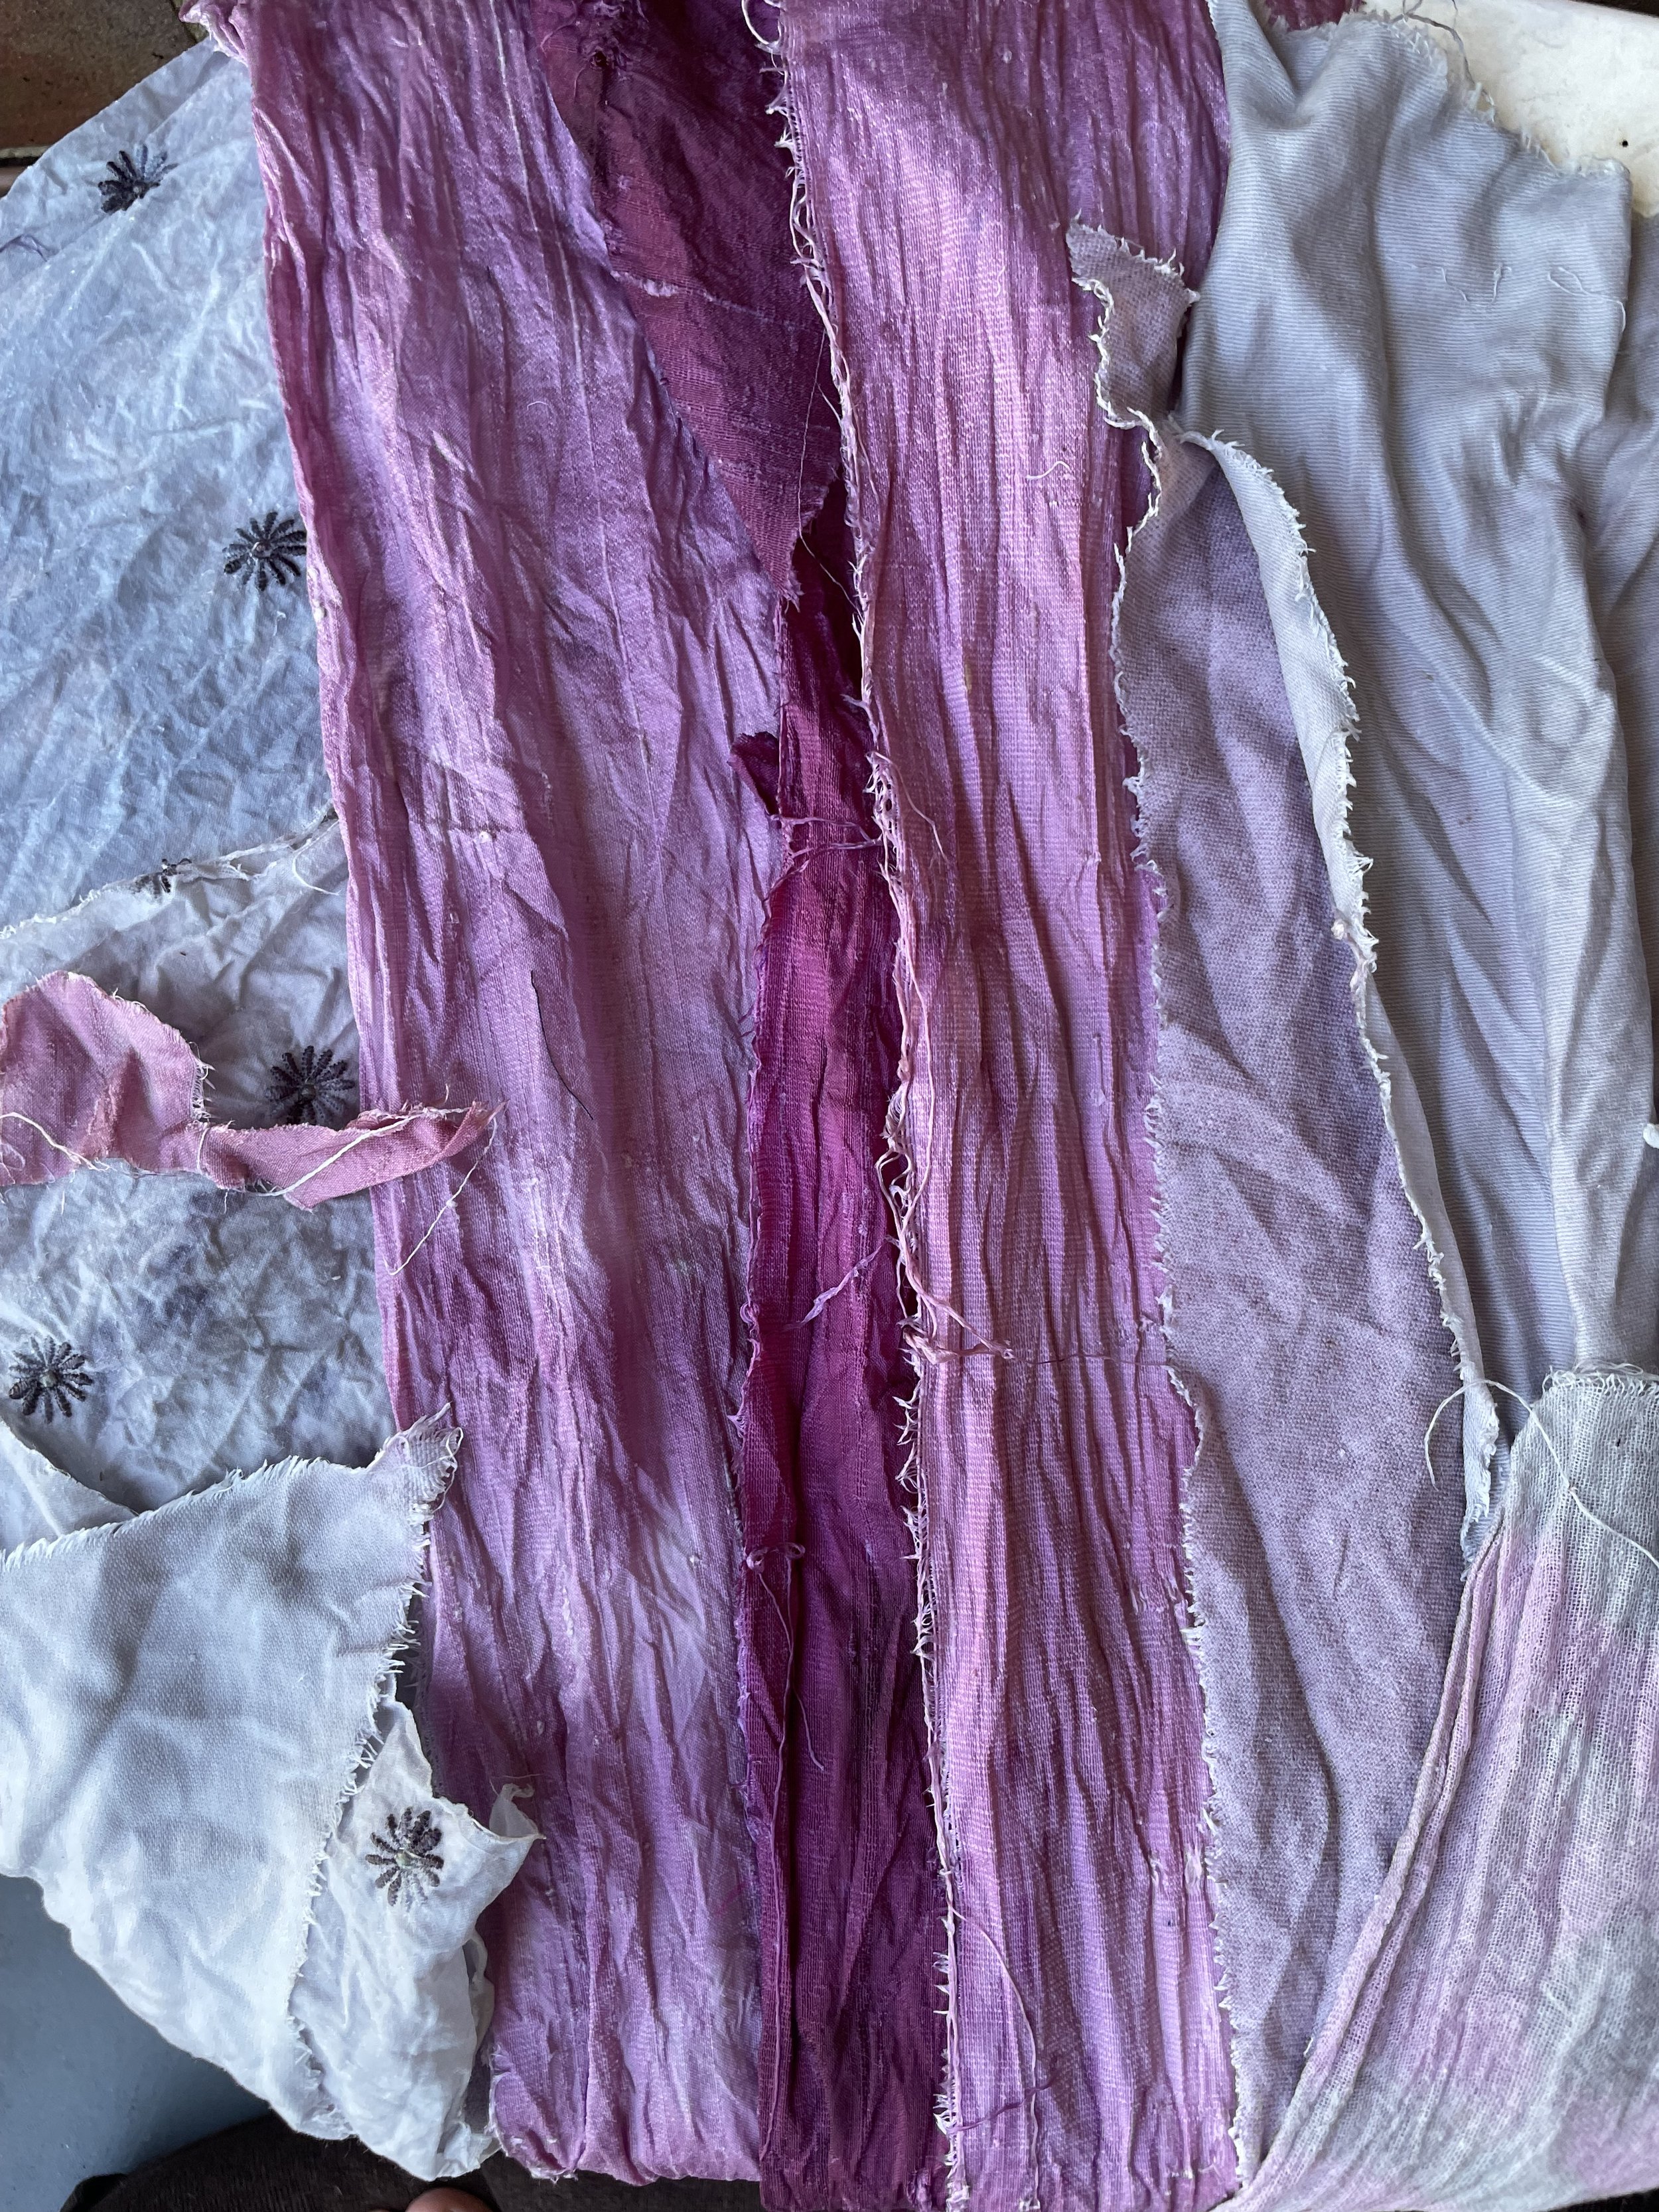 2nd batch wet Natural Dyed Fabric Elderberrry & blackcurrant.JPG